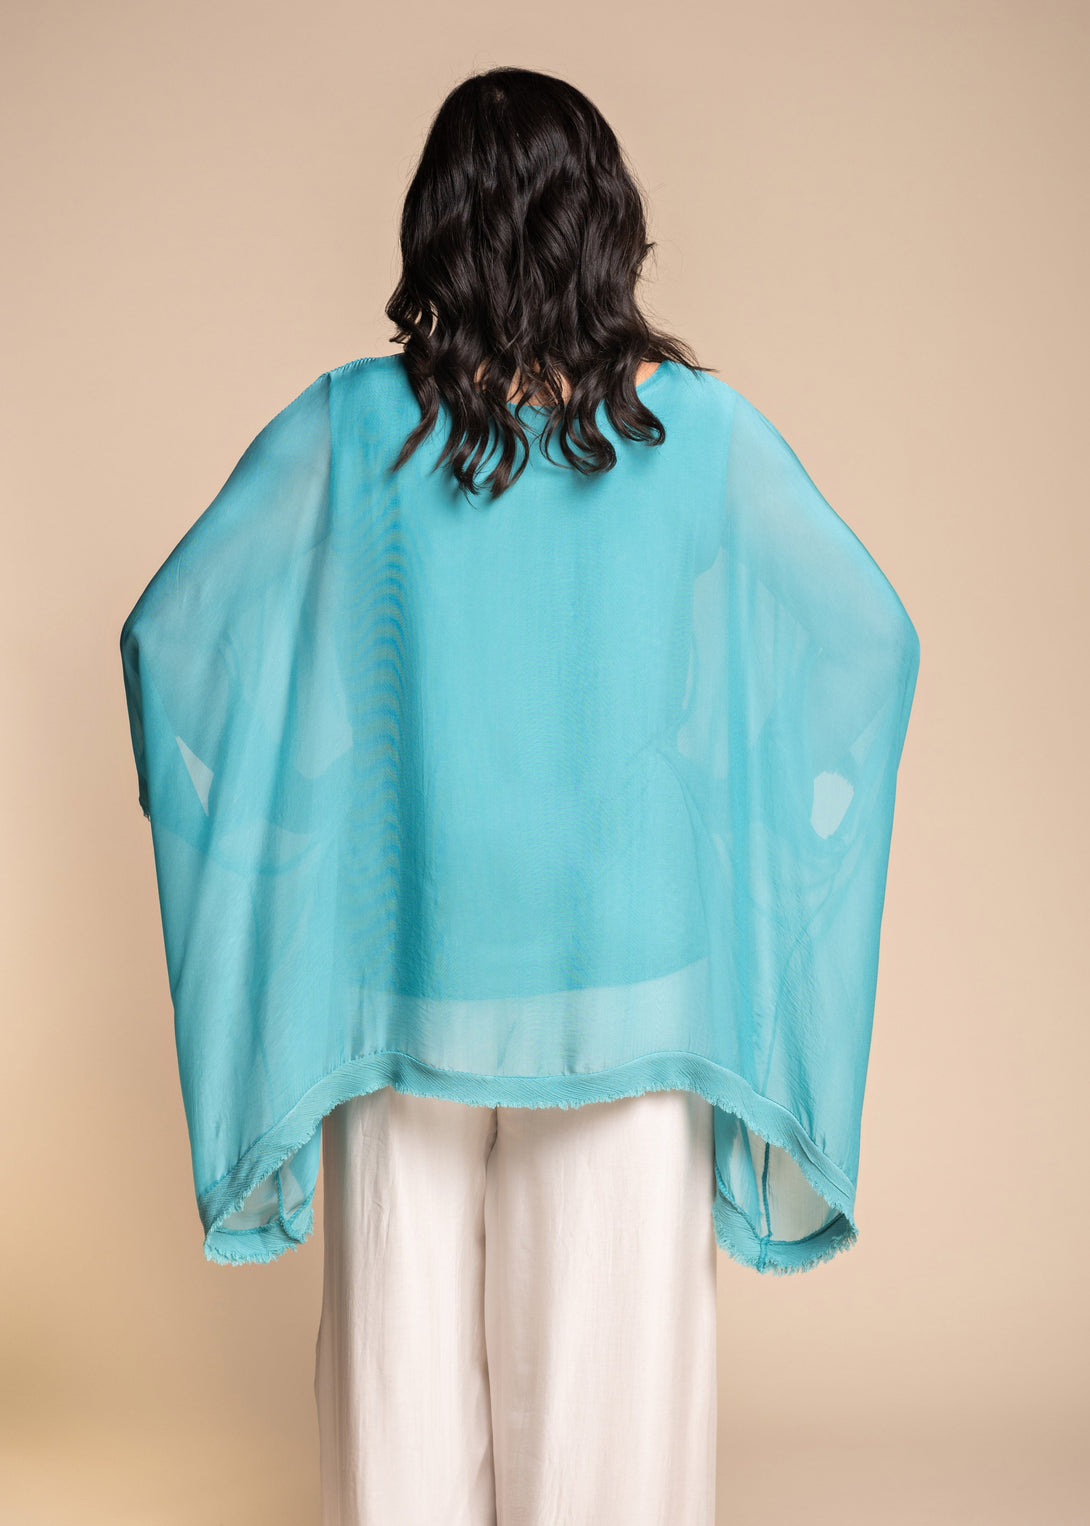 Emiliana Silk Top in Tiffany - Imagine Fashion